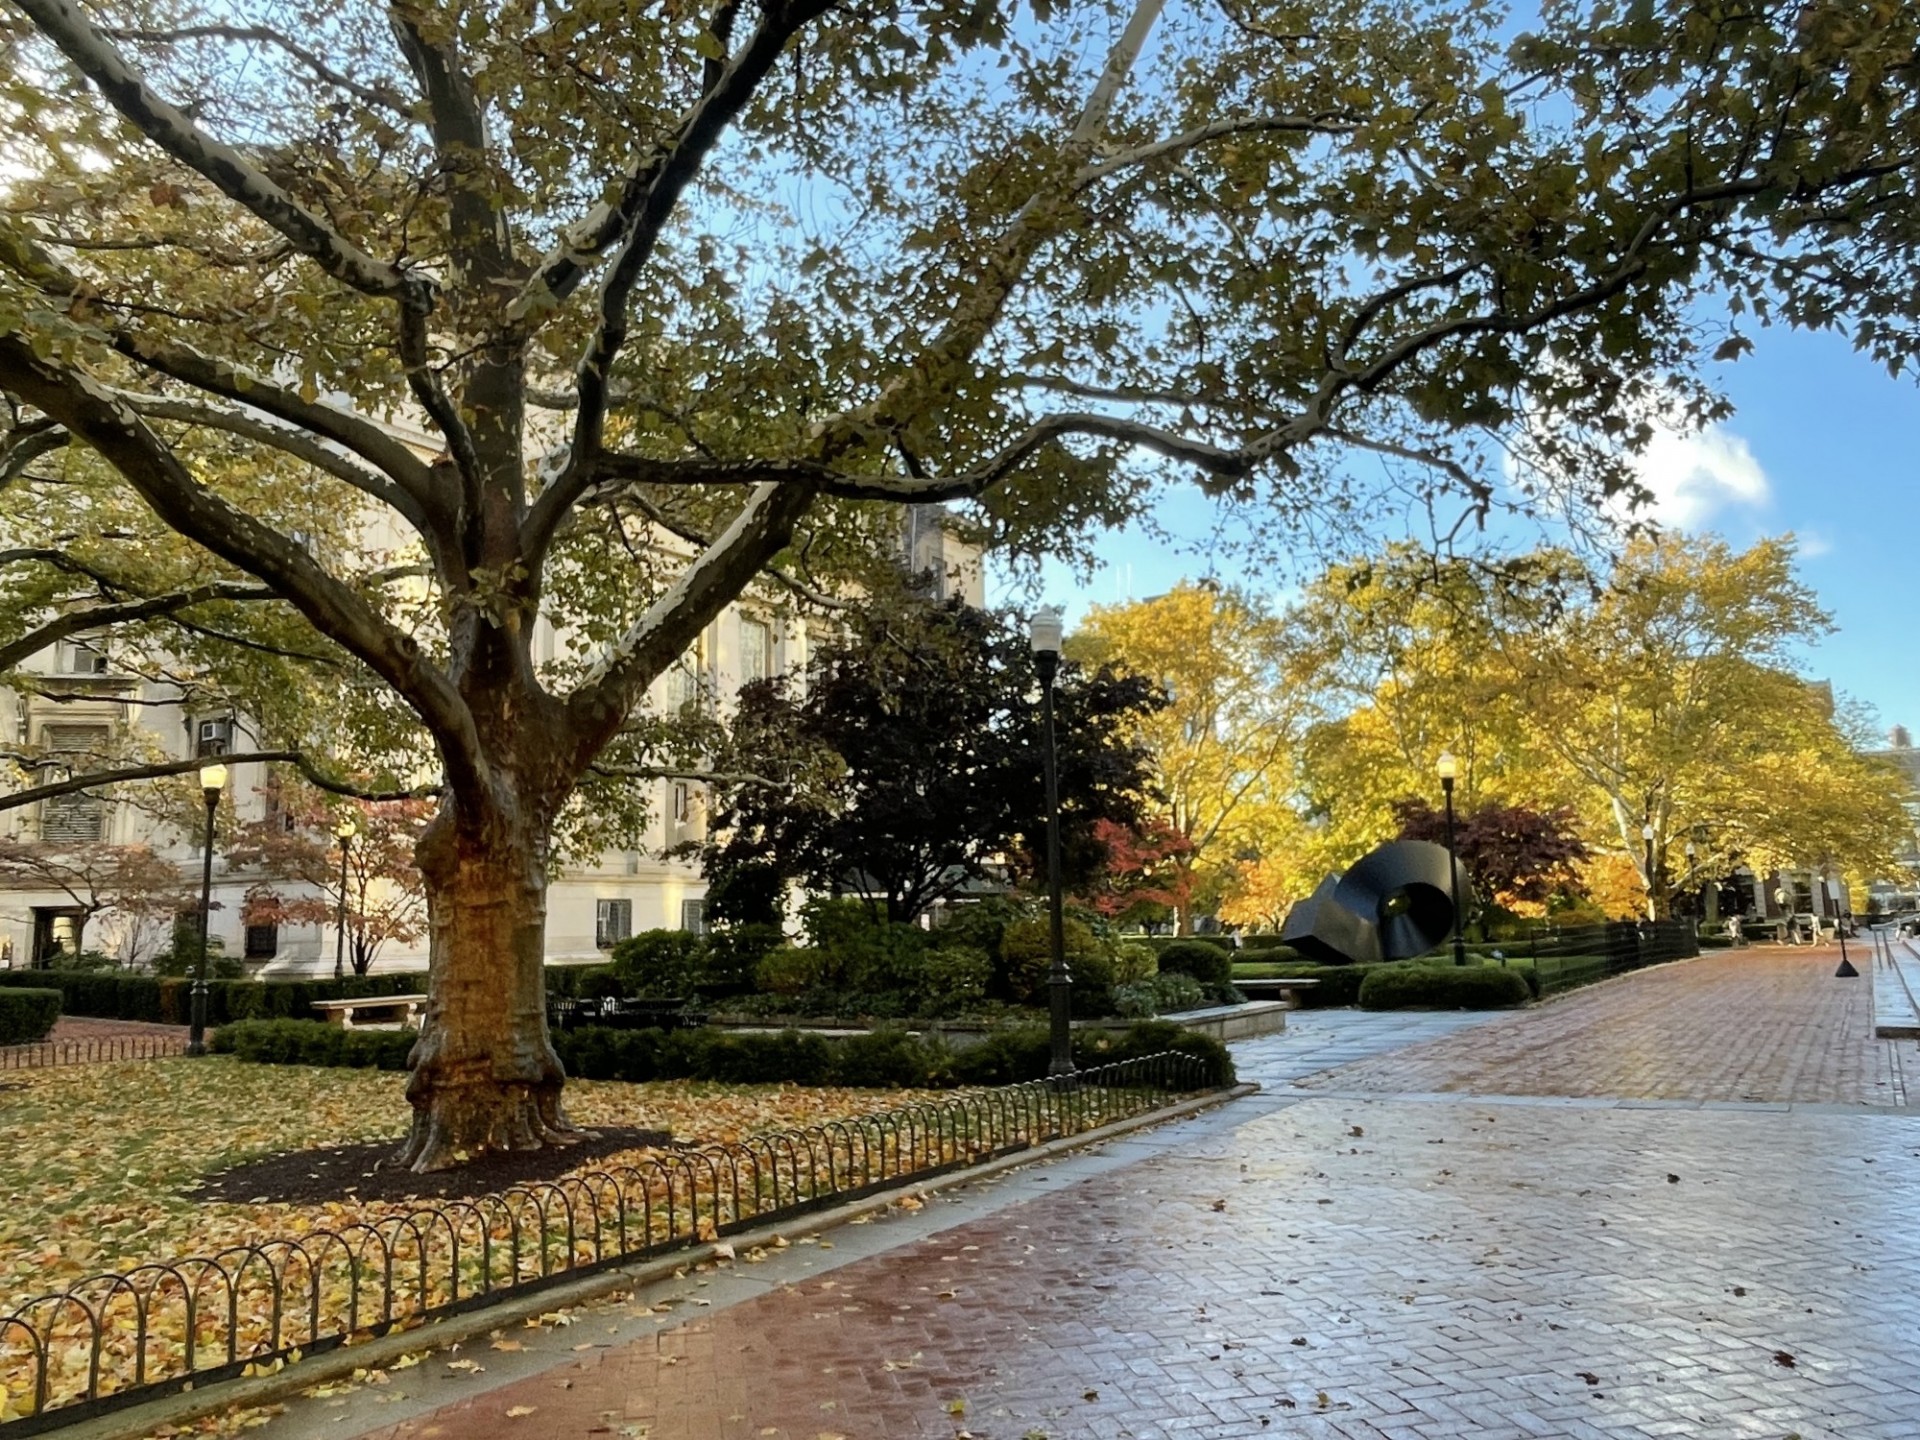 Campus scene in fall